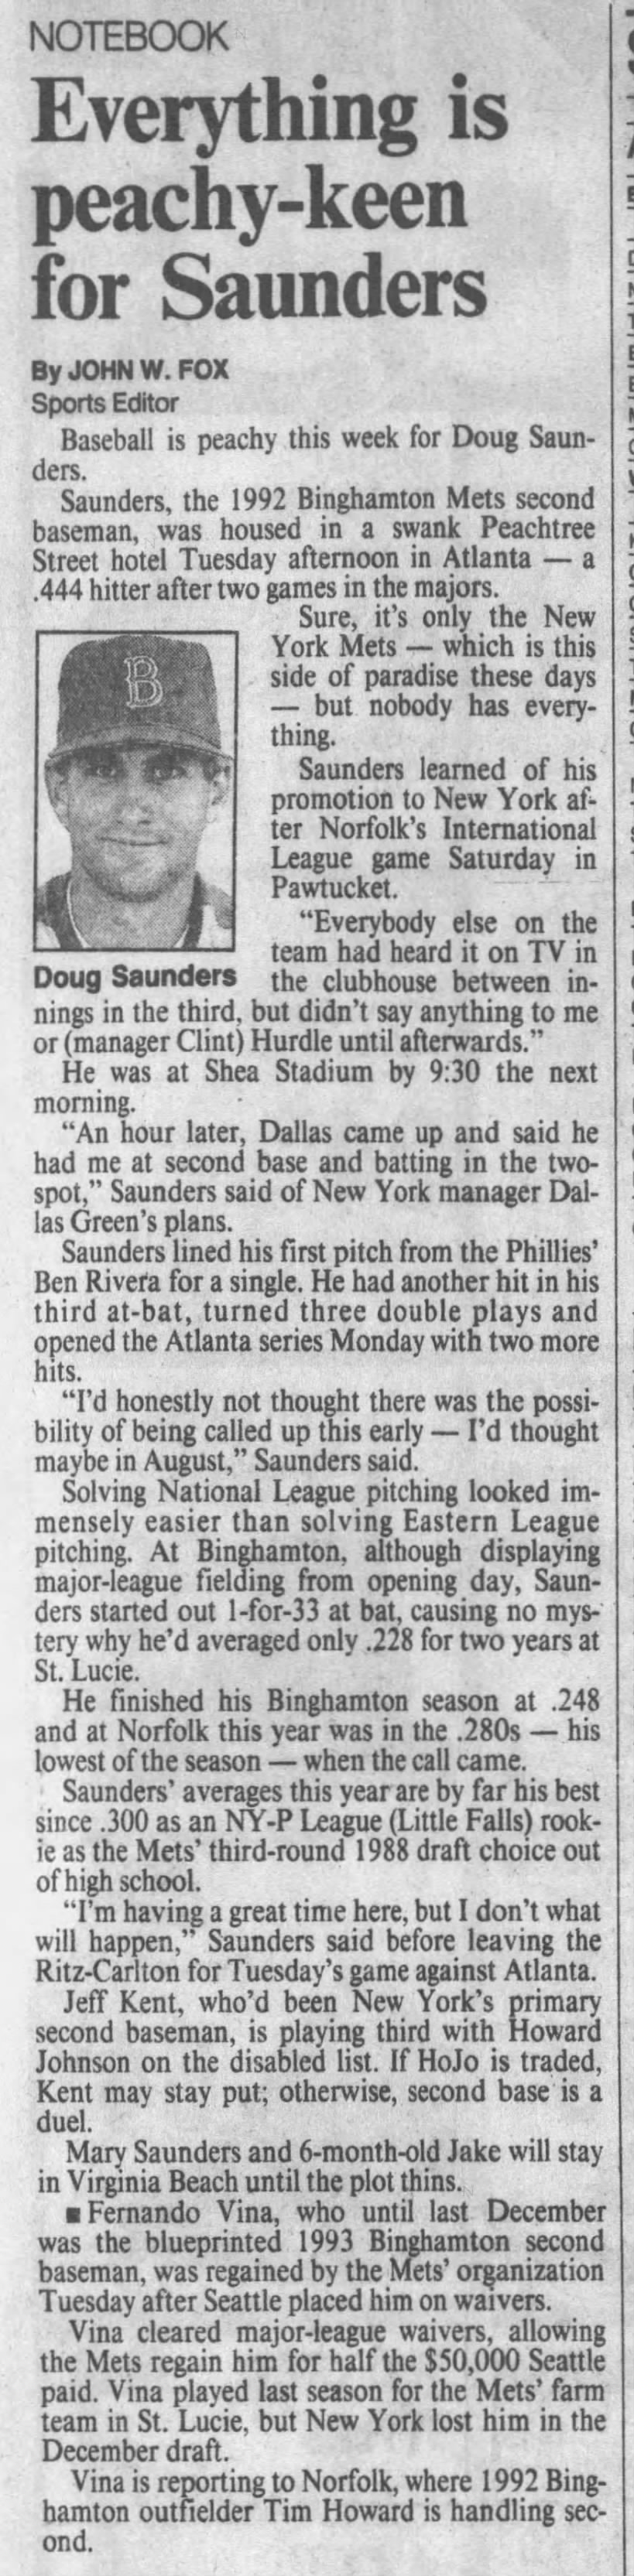 Doug Saunders - June 16, 1993 - Greatest21Days.com